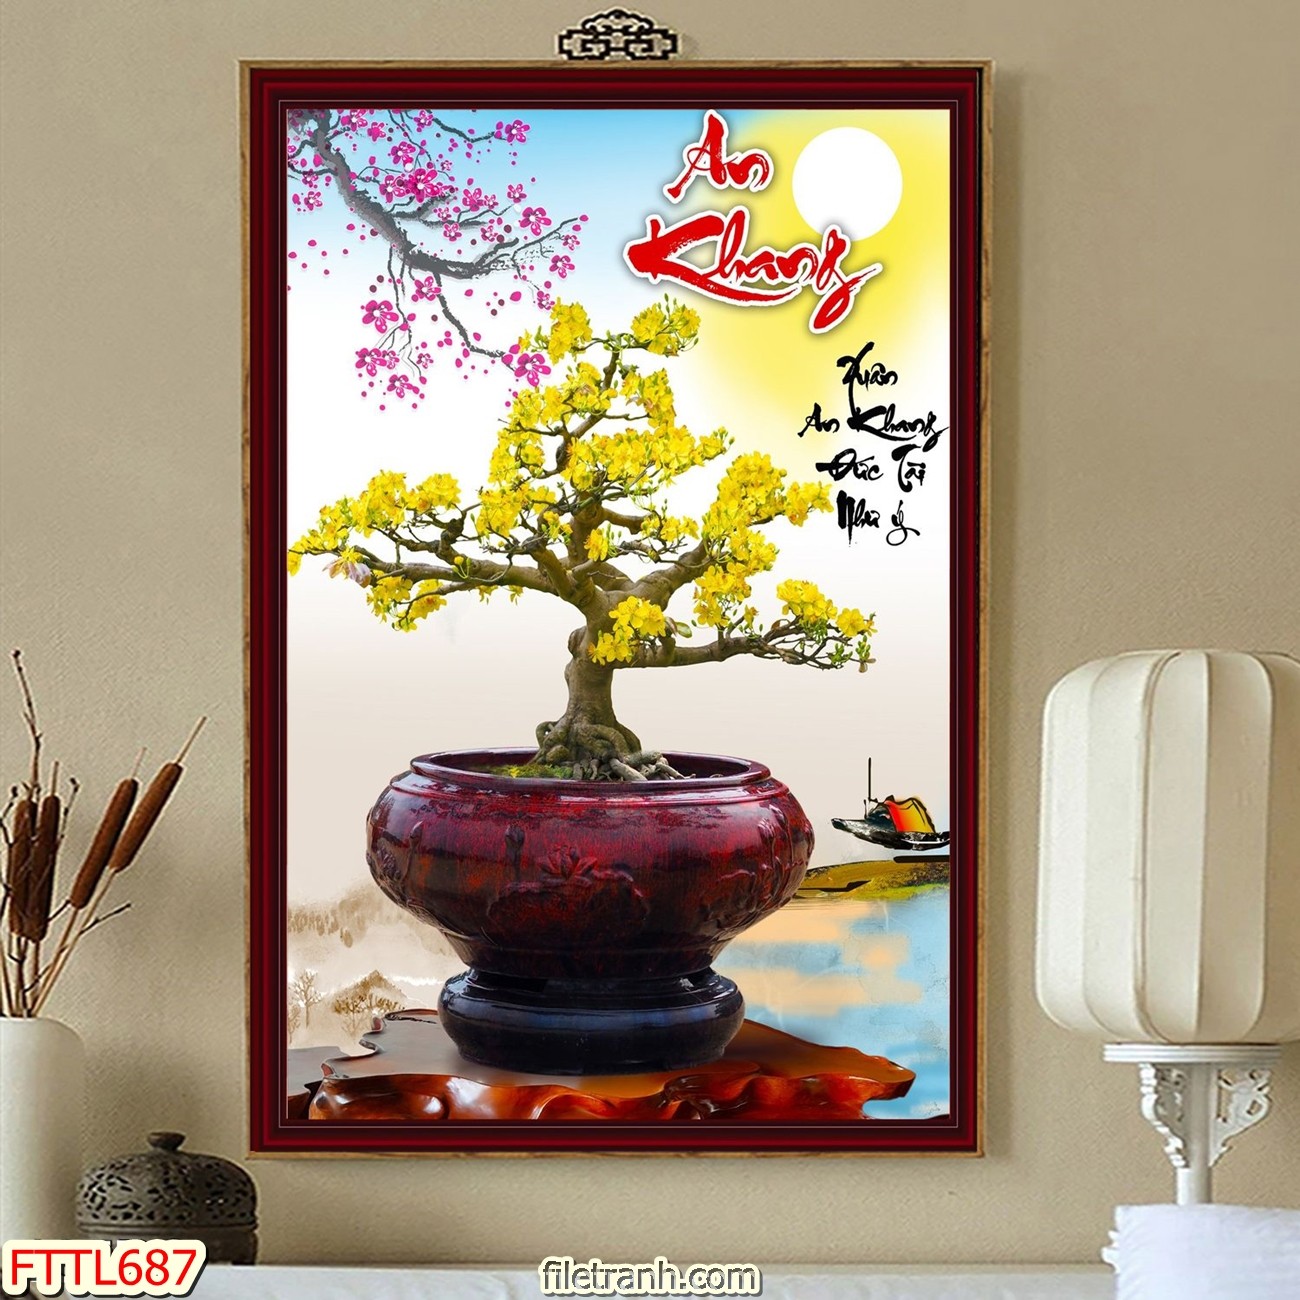 https://filetranh.com/file-tranh-chau-mai-bonsai/file-tranh-chau-mai-bonsai-fttl687.html